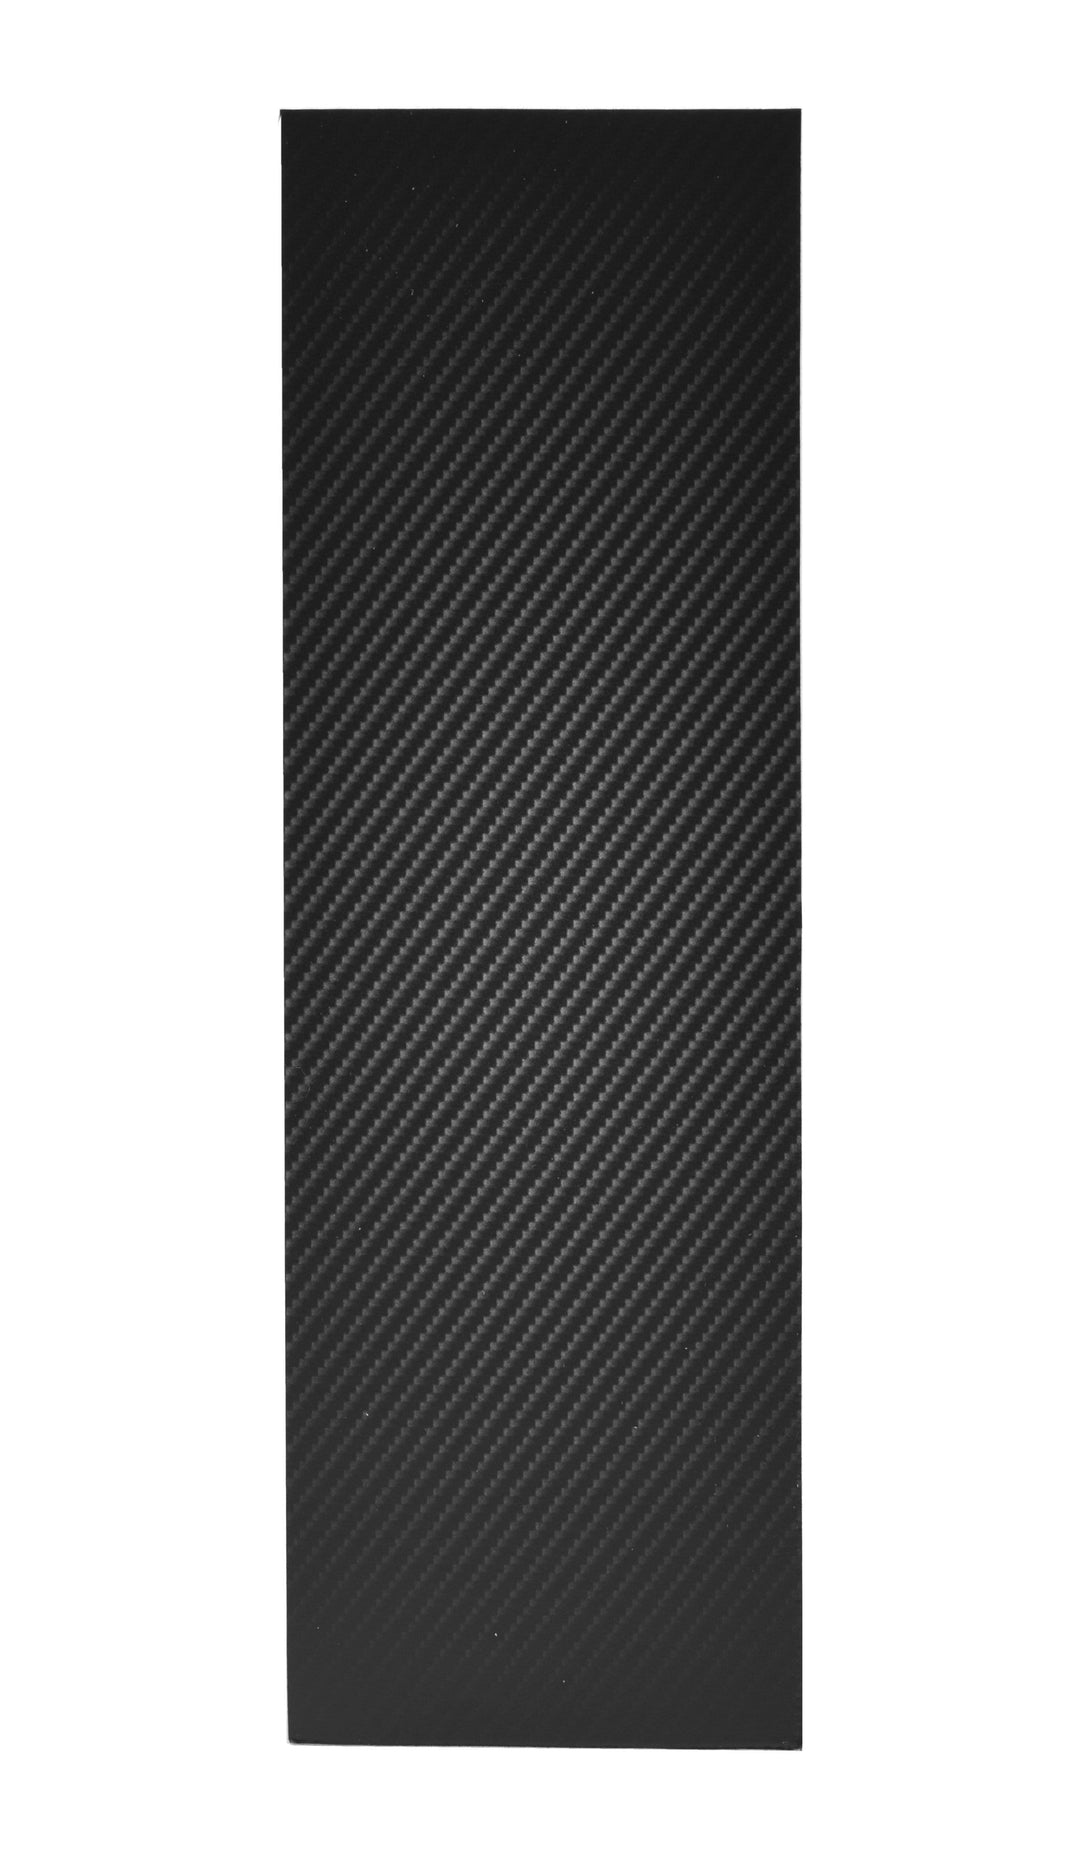 Teak Tuning "Carbon Fiber" Deck Graphic Wrap - 35mm x 110mm